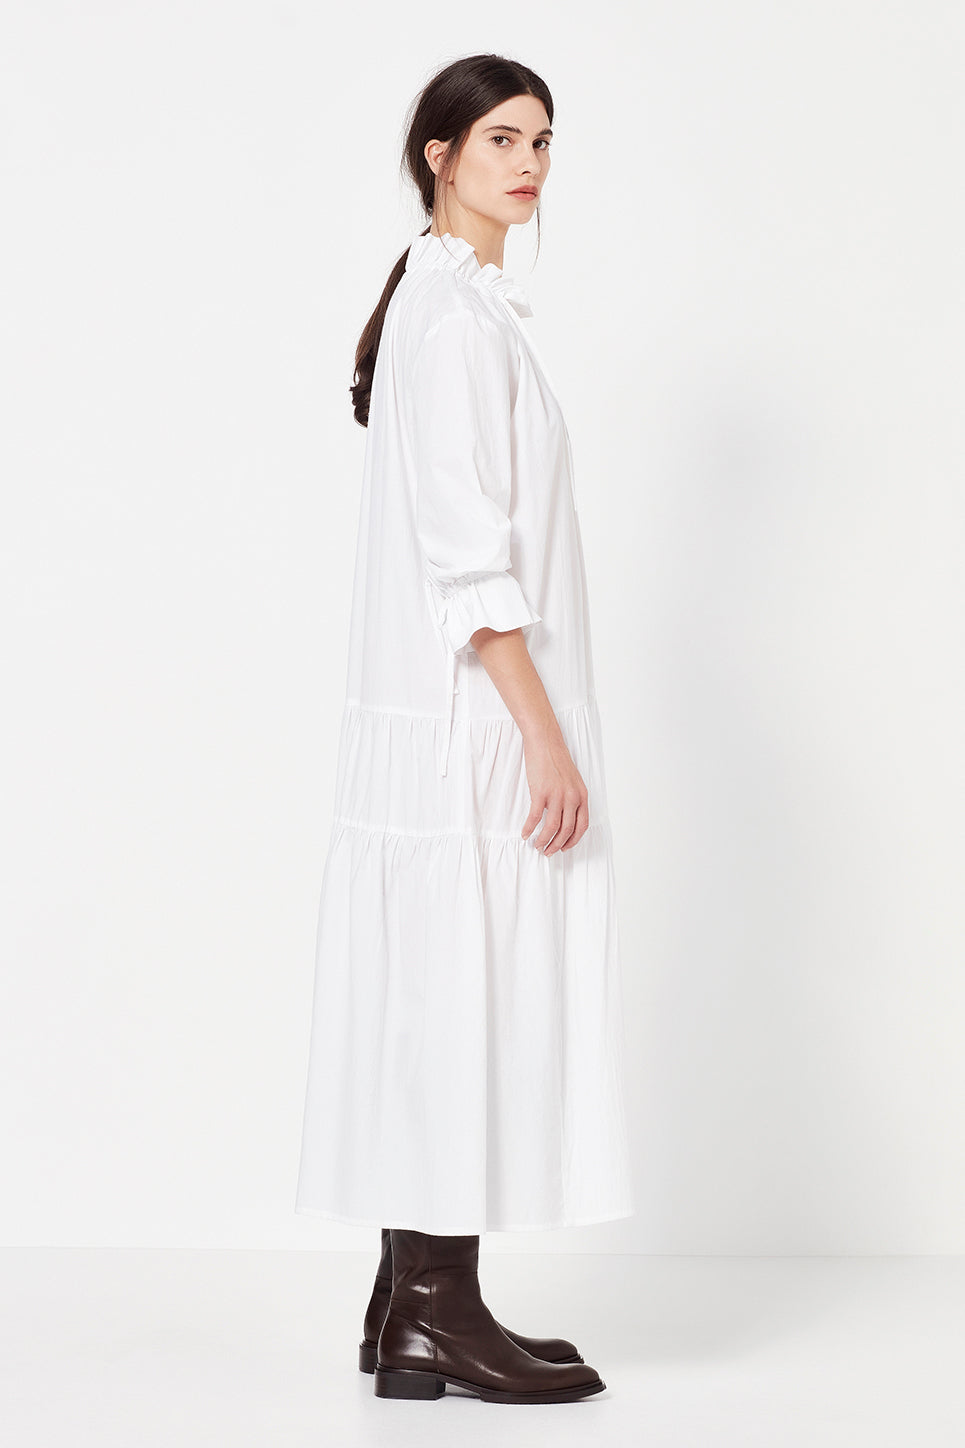 The Primrose Dress in White